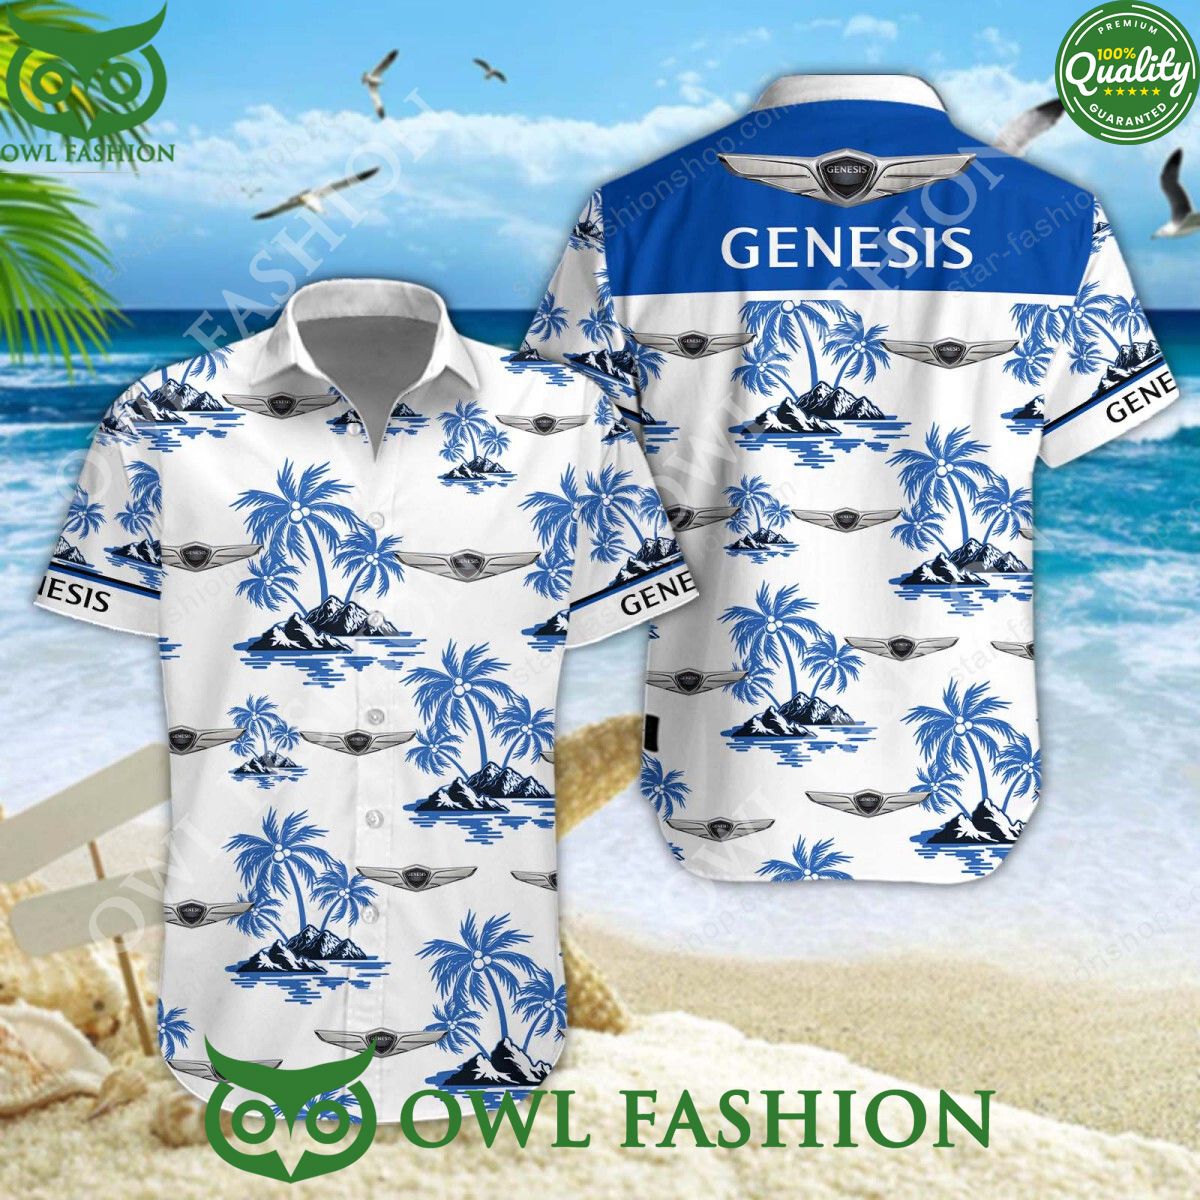 genesis luxury motor brand hawaiian shirt and shorts 1 OeHgA.jpg